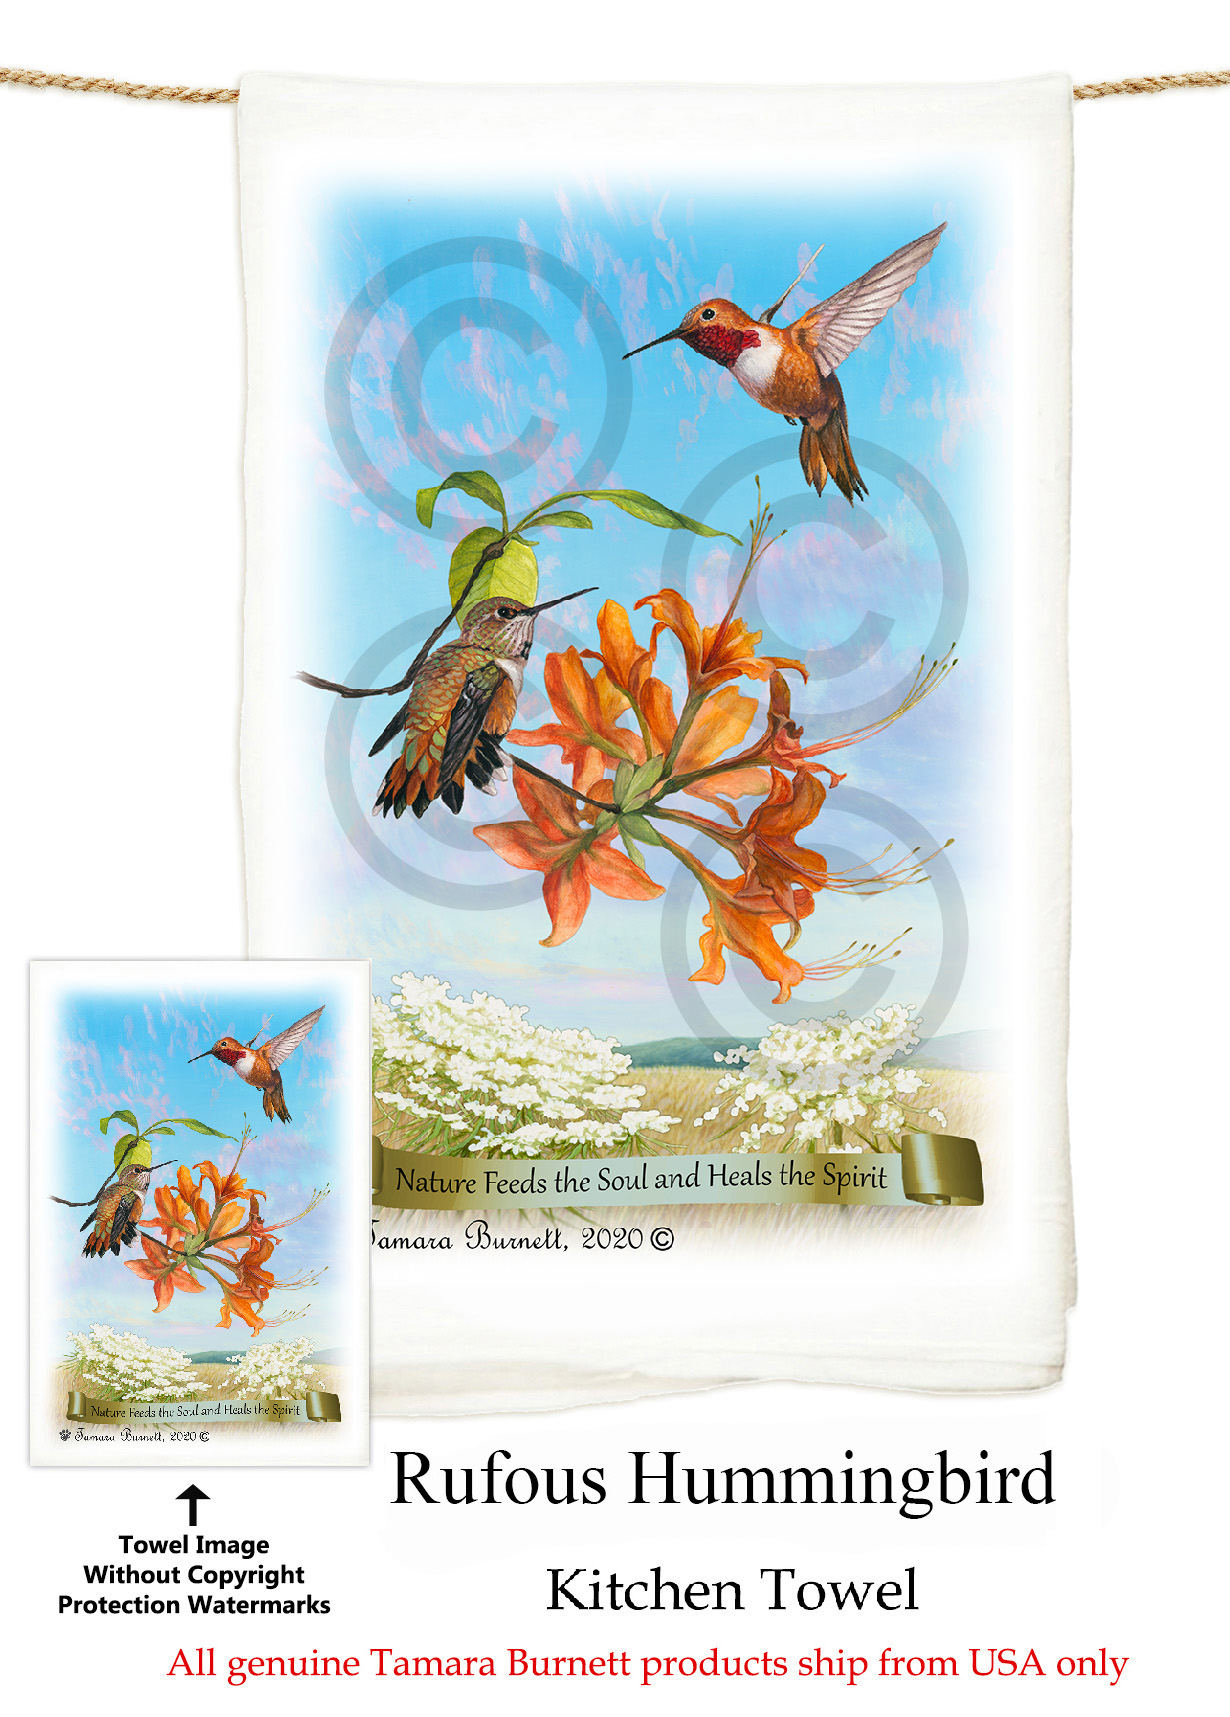 Rufous Hummingbirds - Flour Sack Towel image sized 1230 x 1717